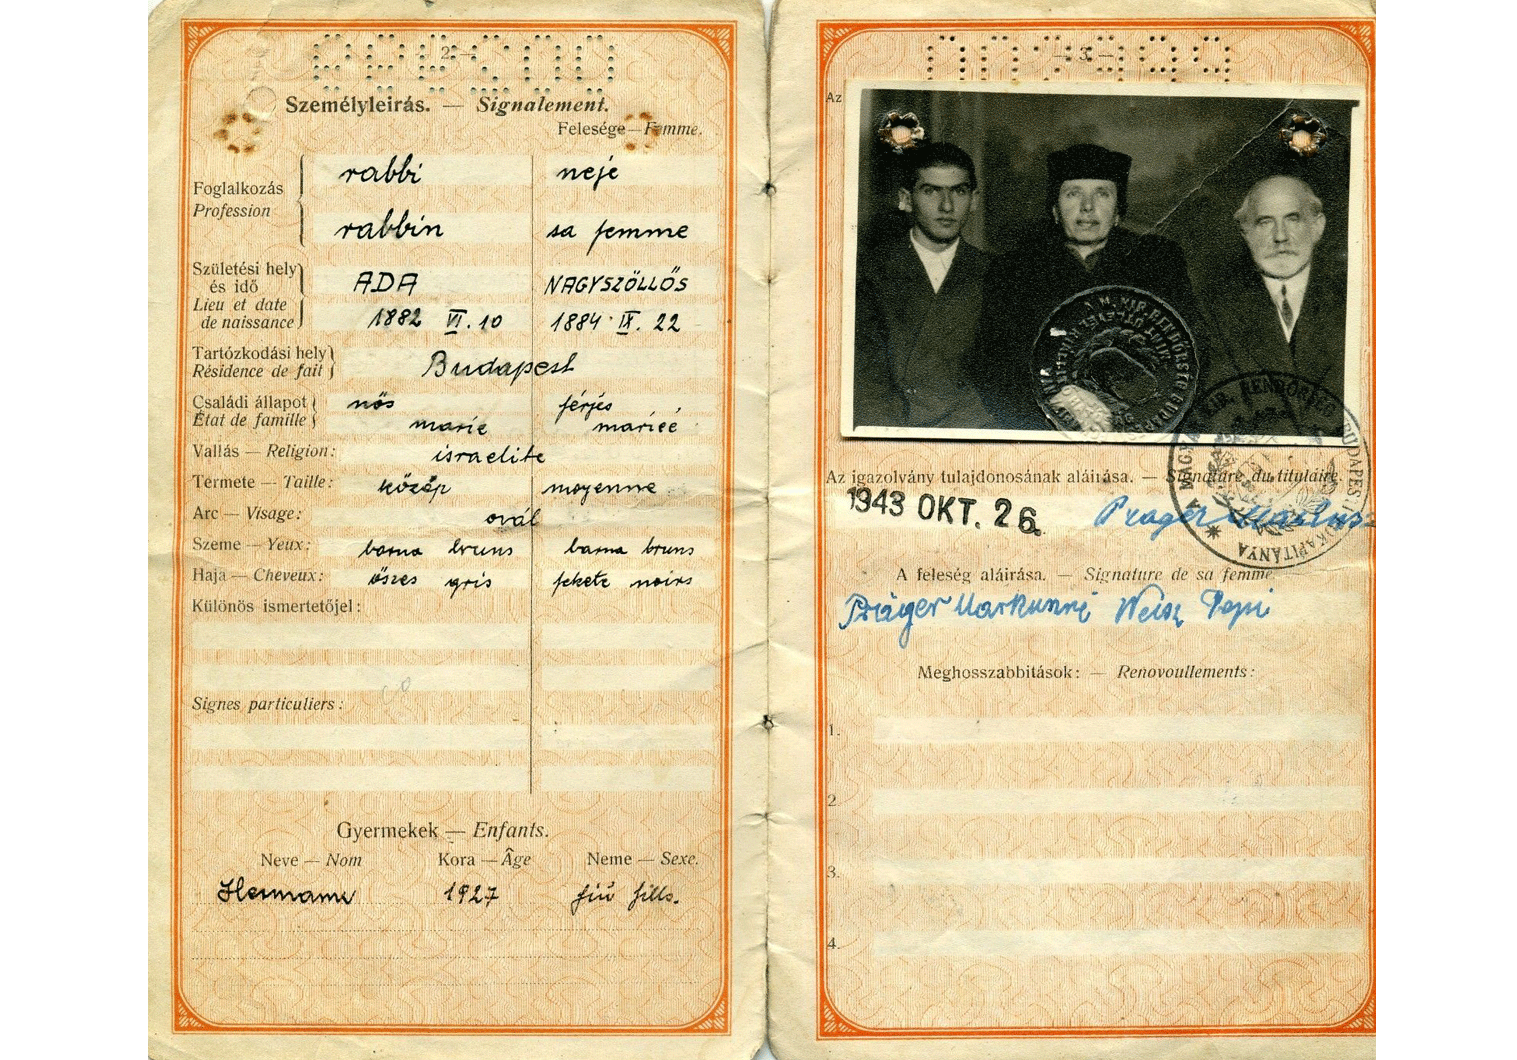 WW2 refugee passport